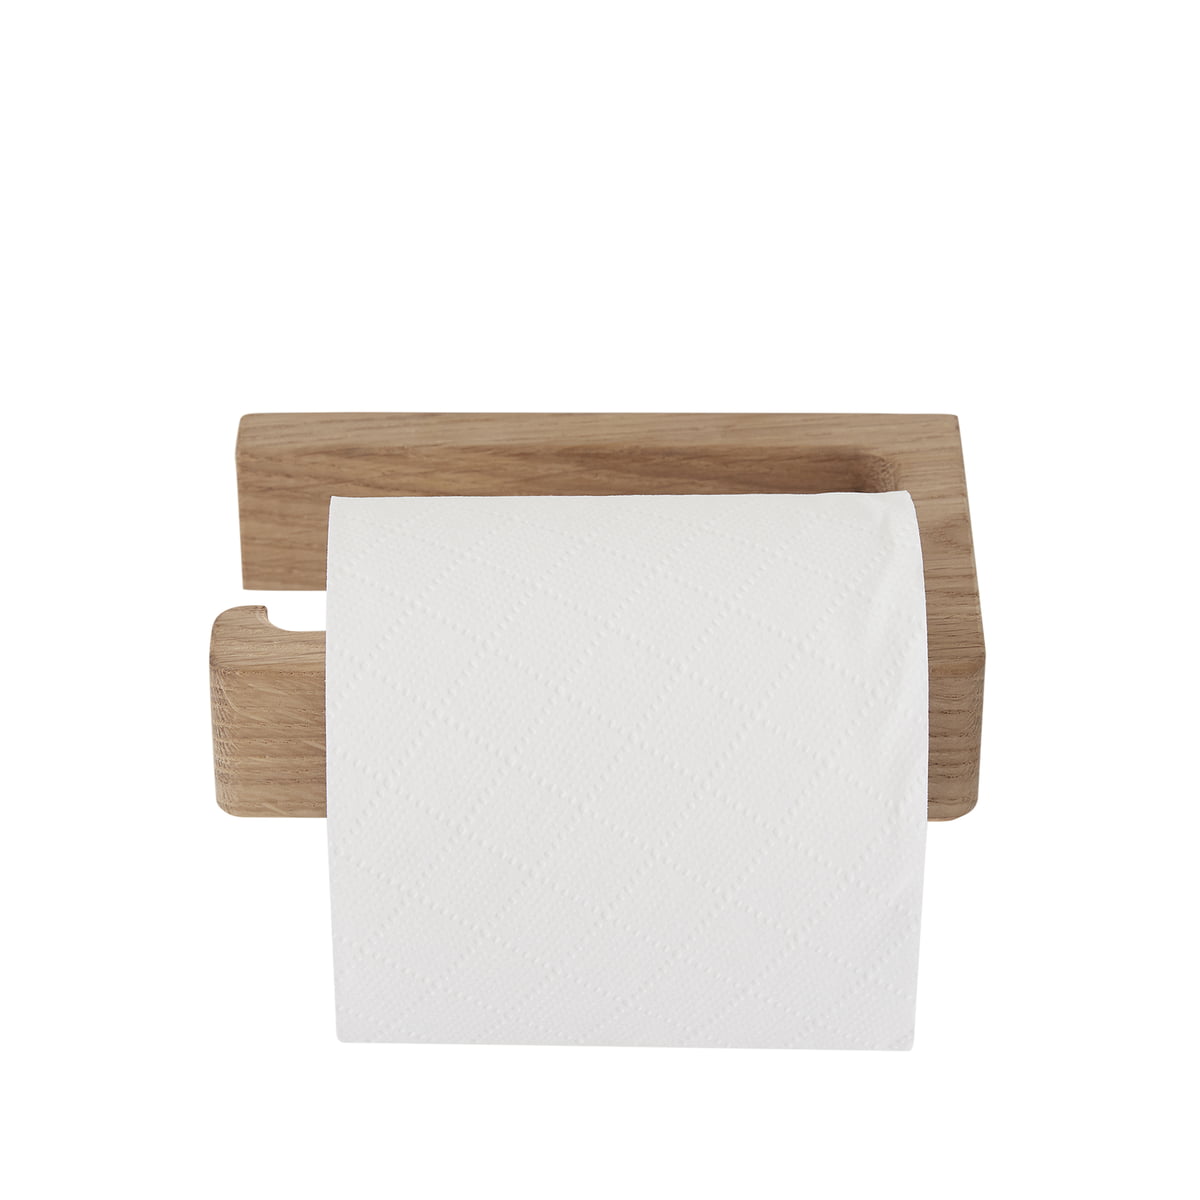 Andersen møbler toalettpapirholder, eik